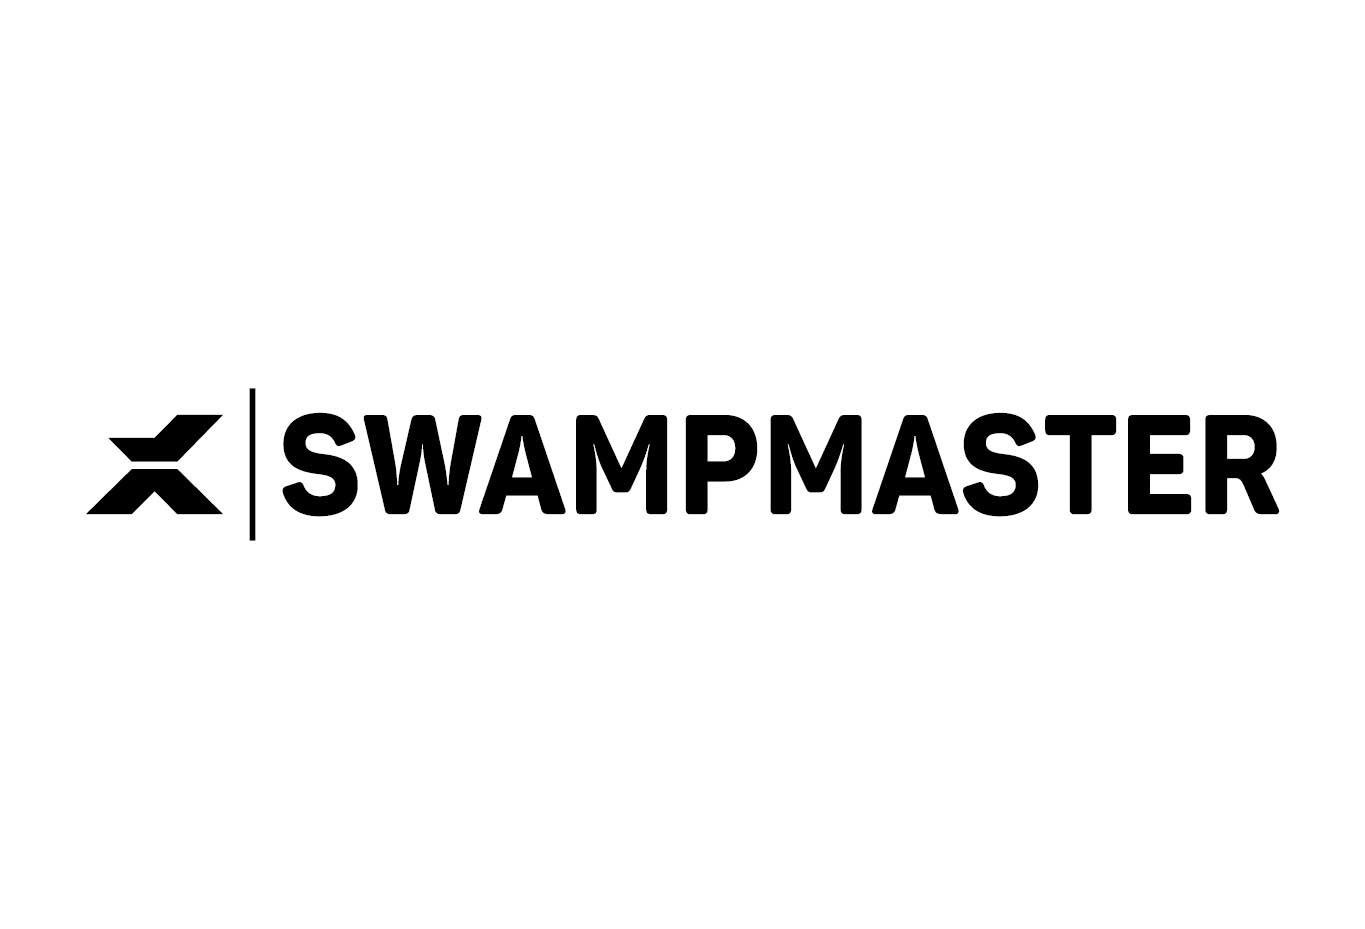 Swampmaster